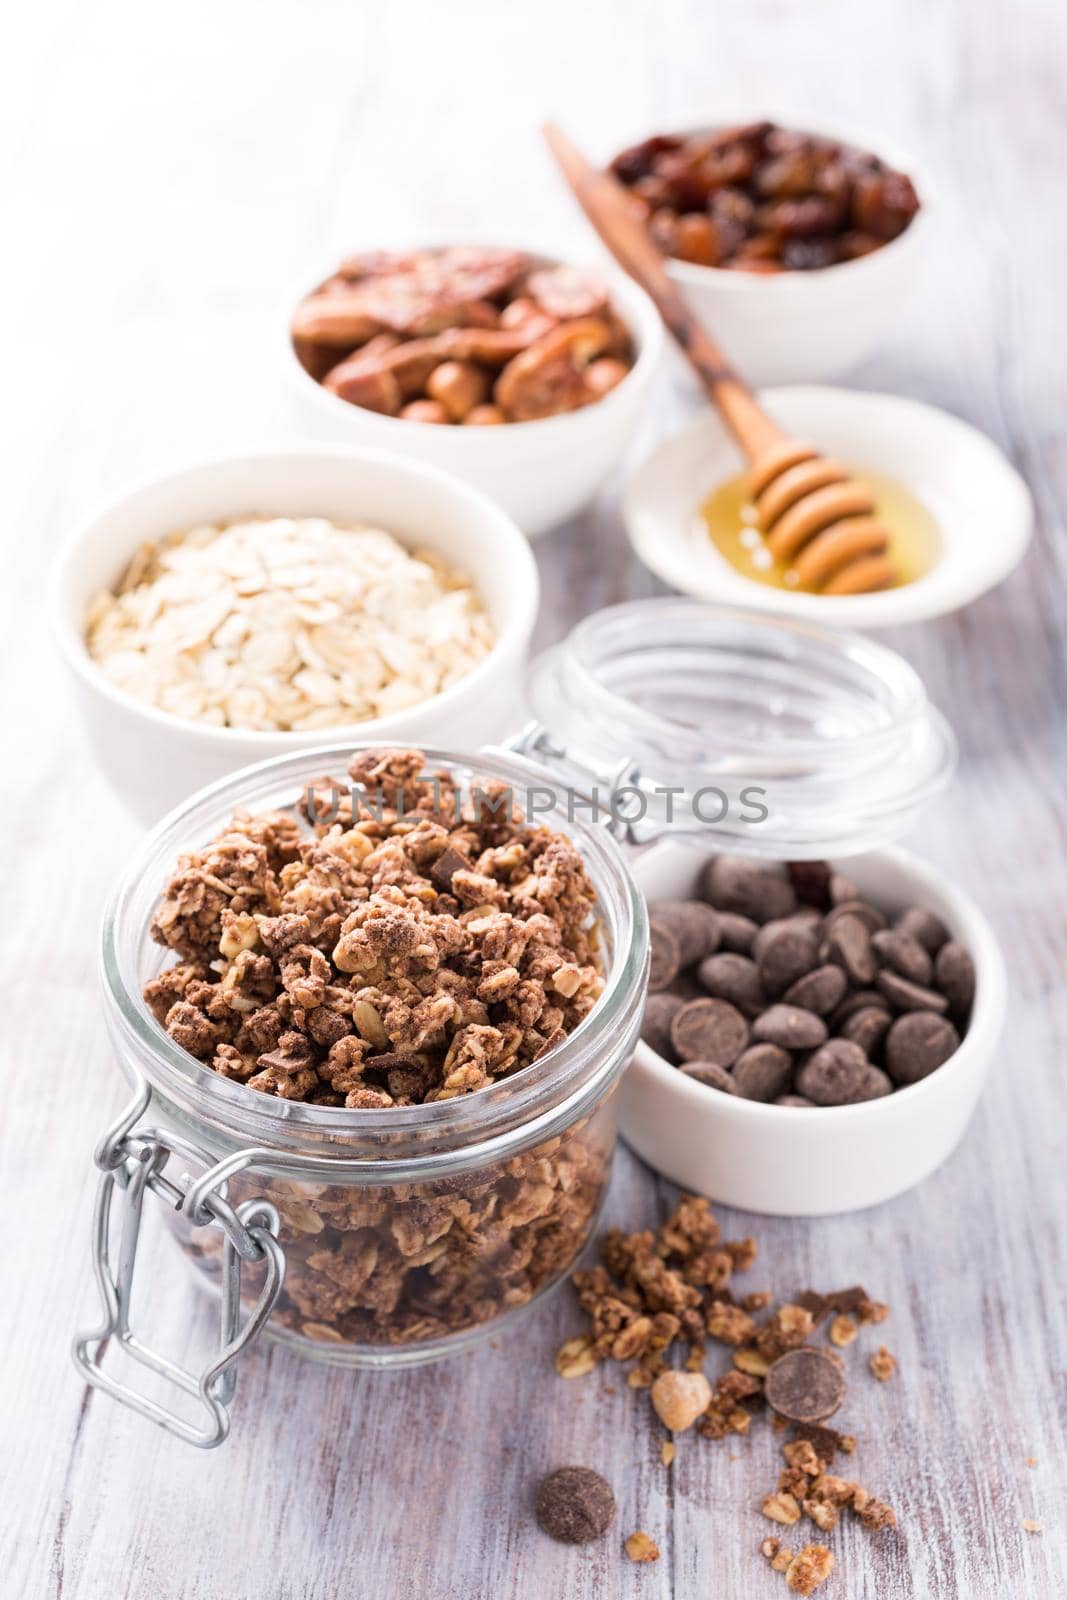 Homemade chocolate granola ingredients by IrynaMelnyk